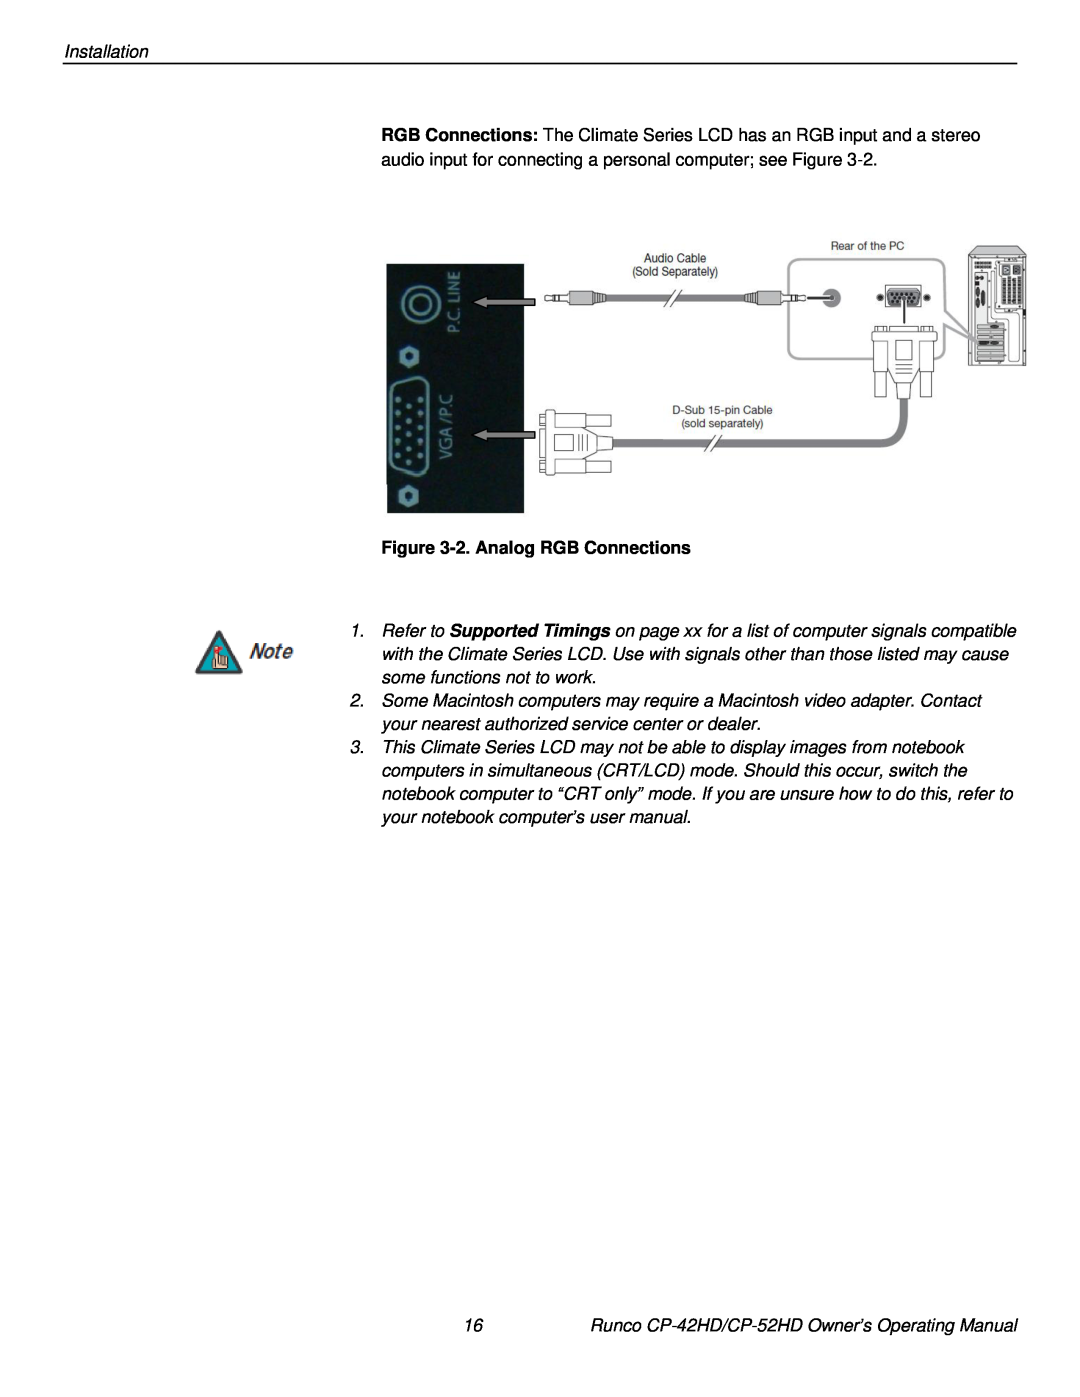 Runco CP-42HD, CP-52HD manual 2. Analog RGB Connections 